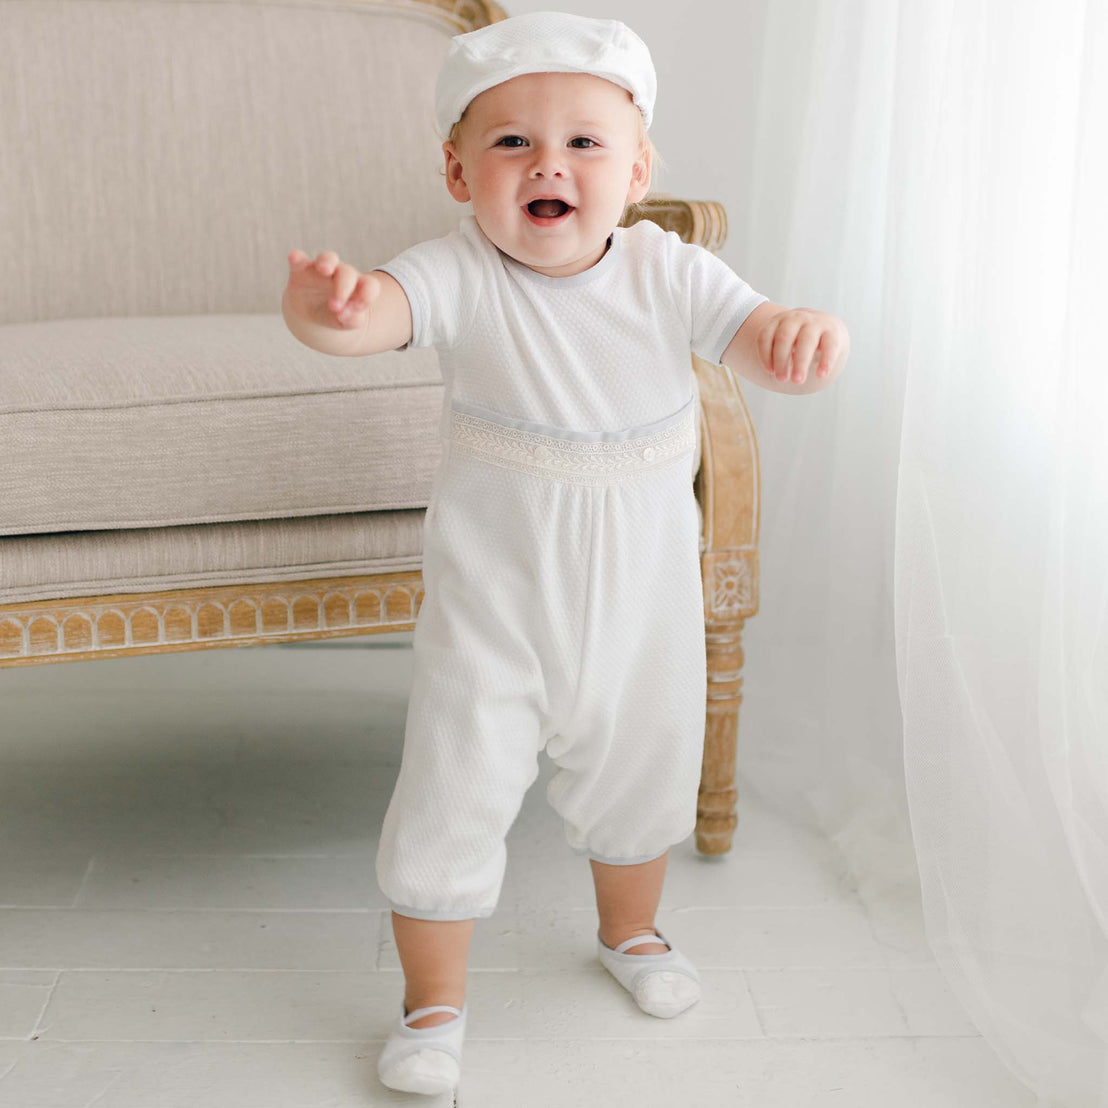 Baby boy smiles and walks as he wears the Harrison Short Sleeve Romper